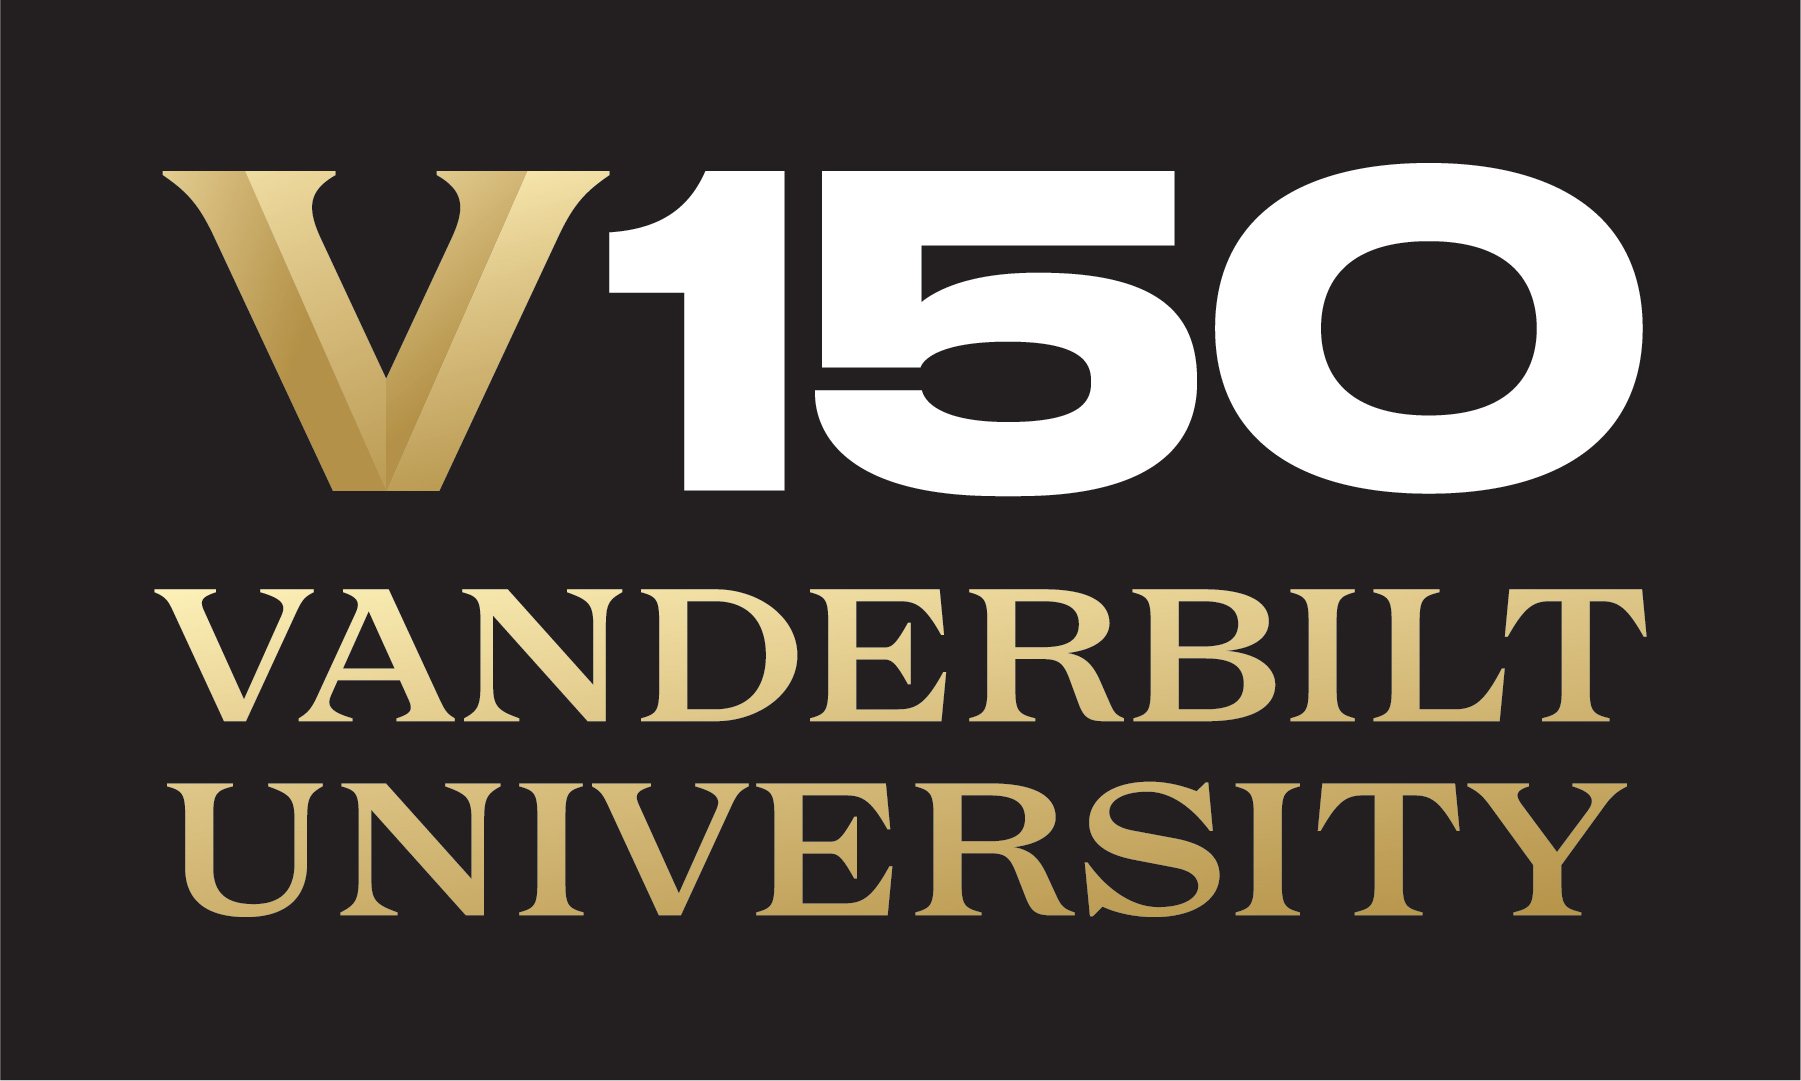 Vanderbilt_Univ_Sesqui_logo_Hst.jpg